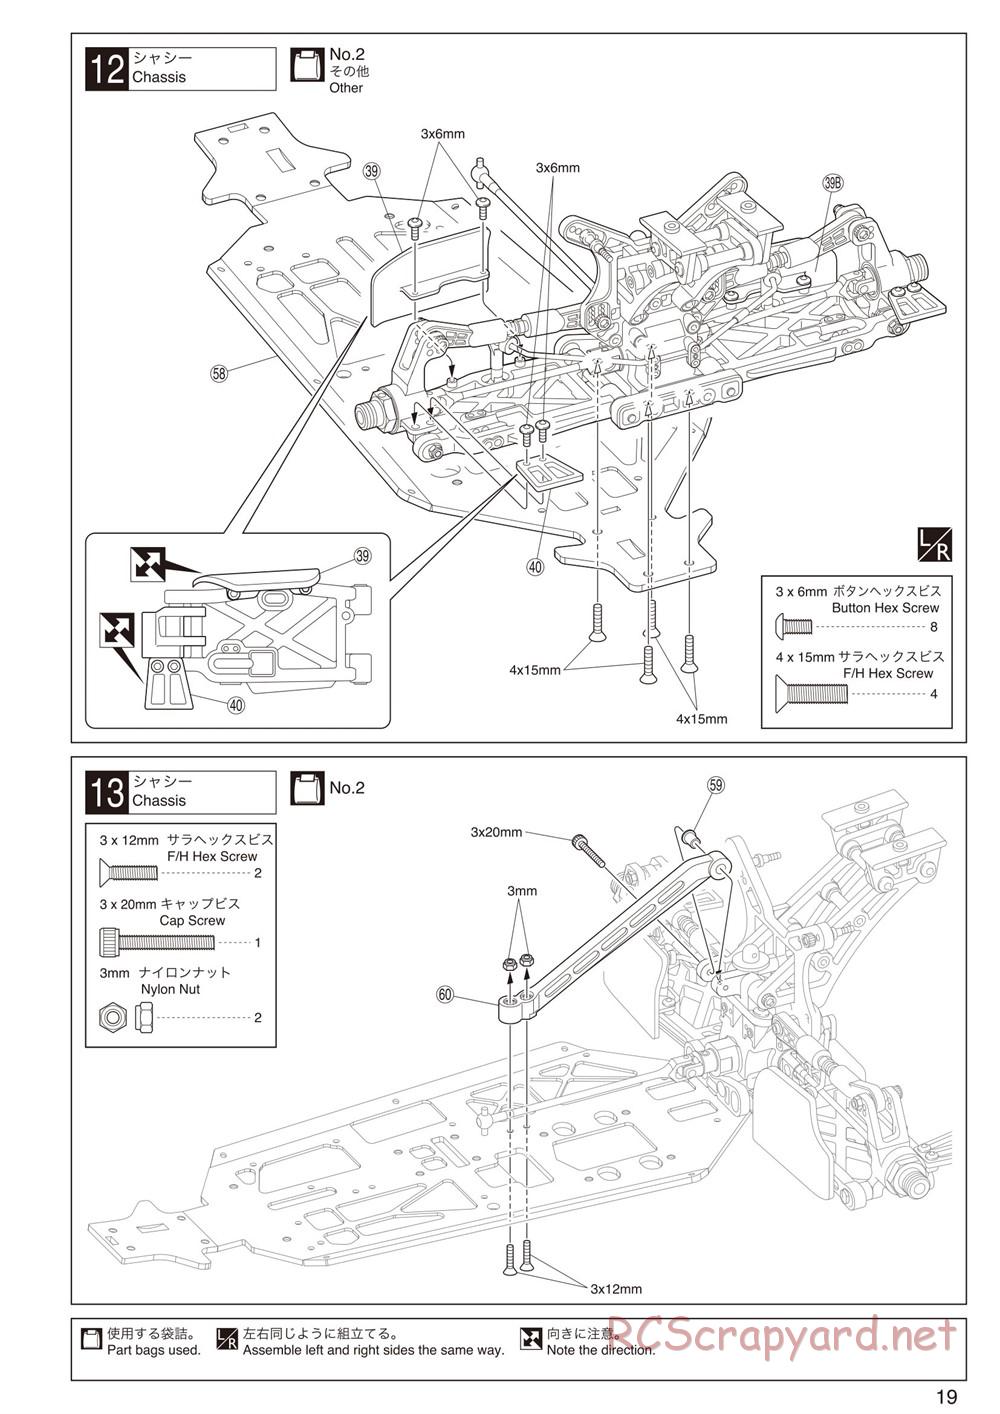 Kyosho - Inferno MP9 TKI2 - Manual - Page 19